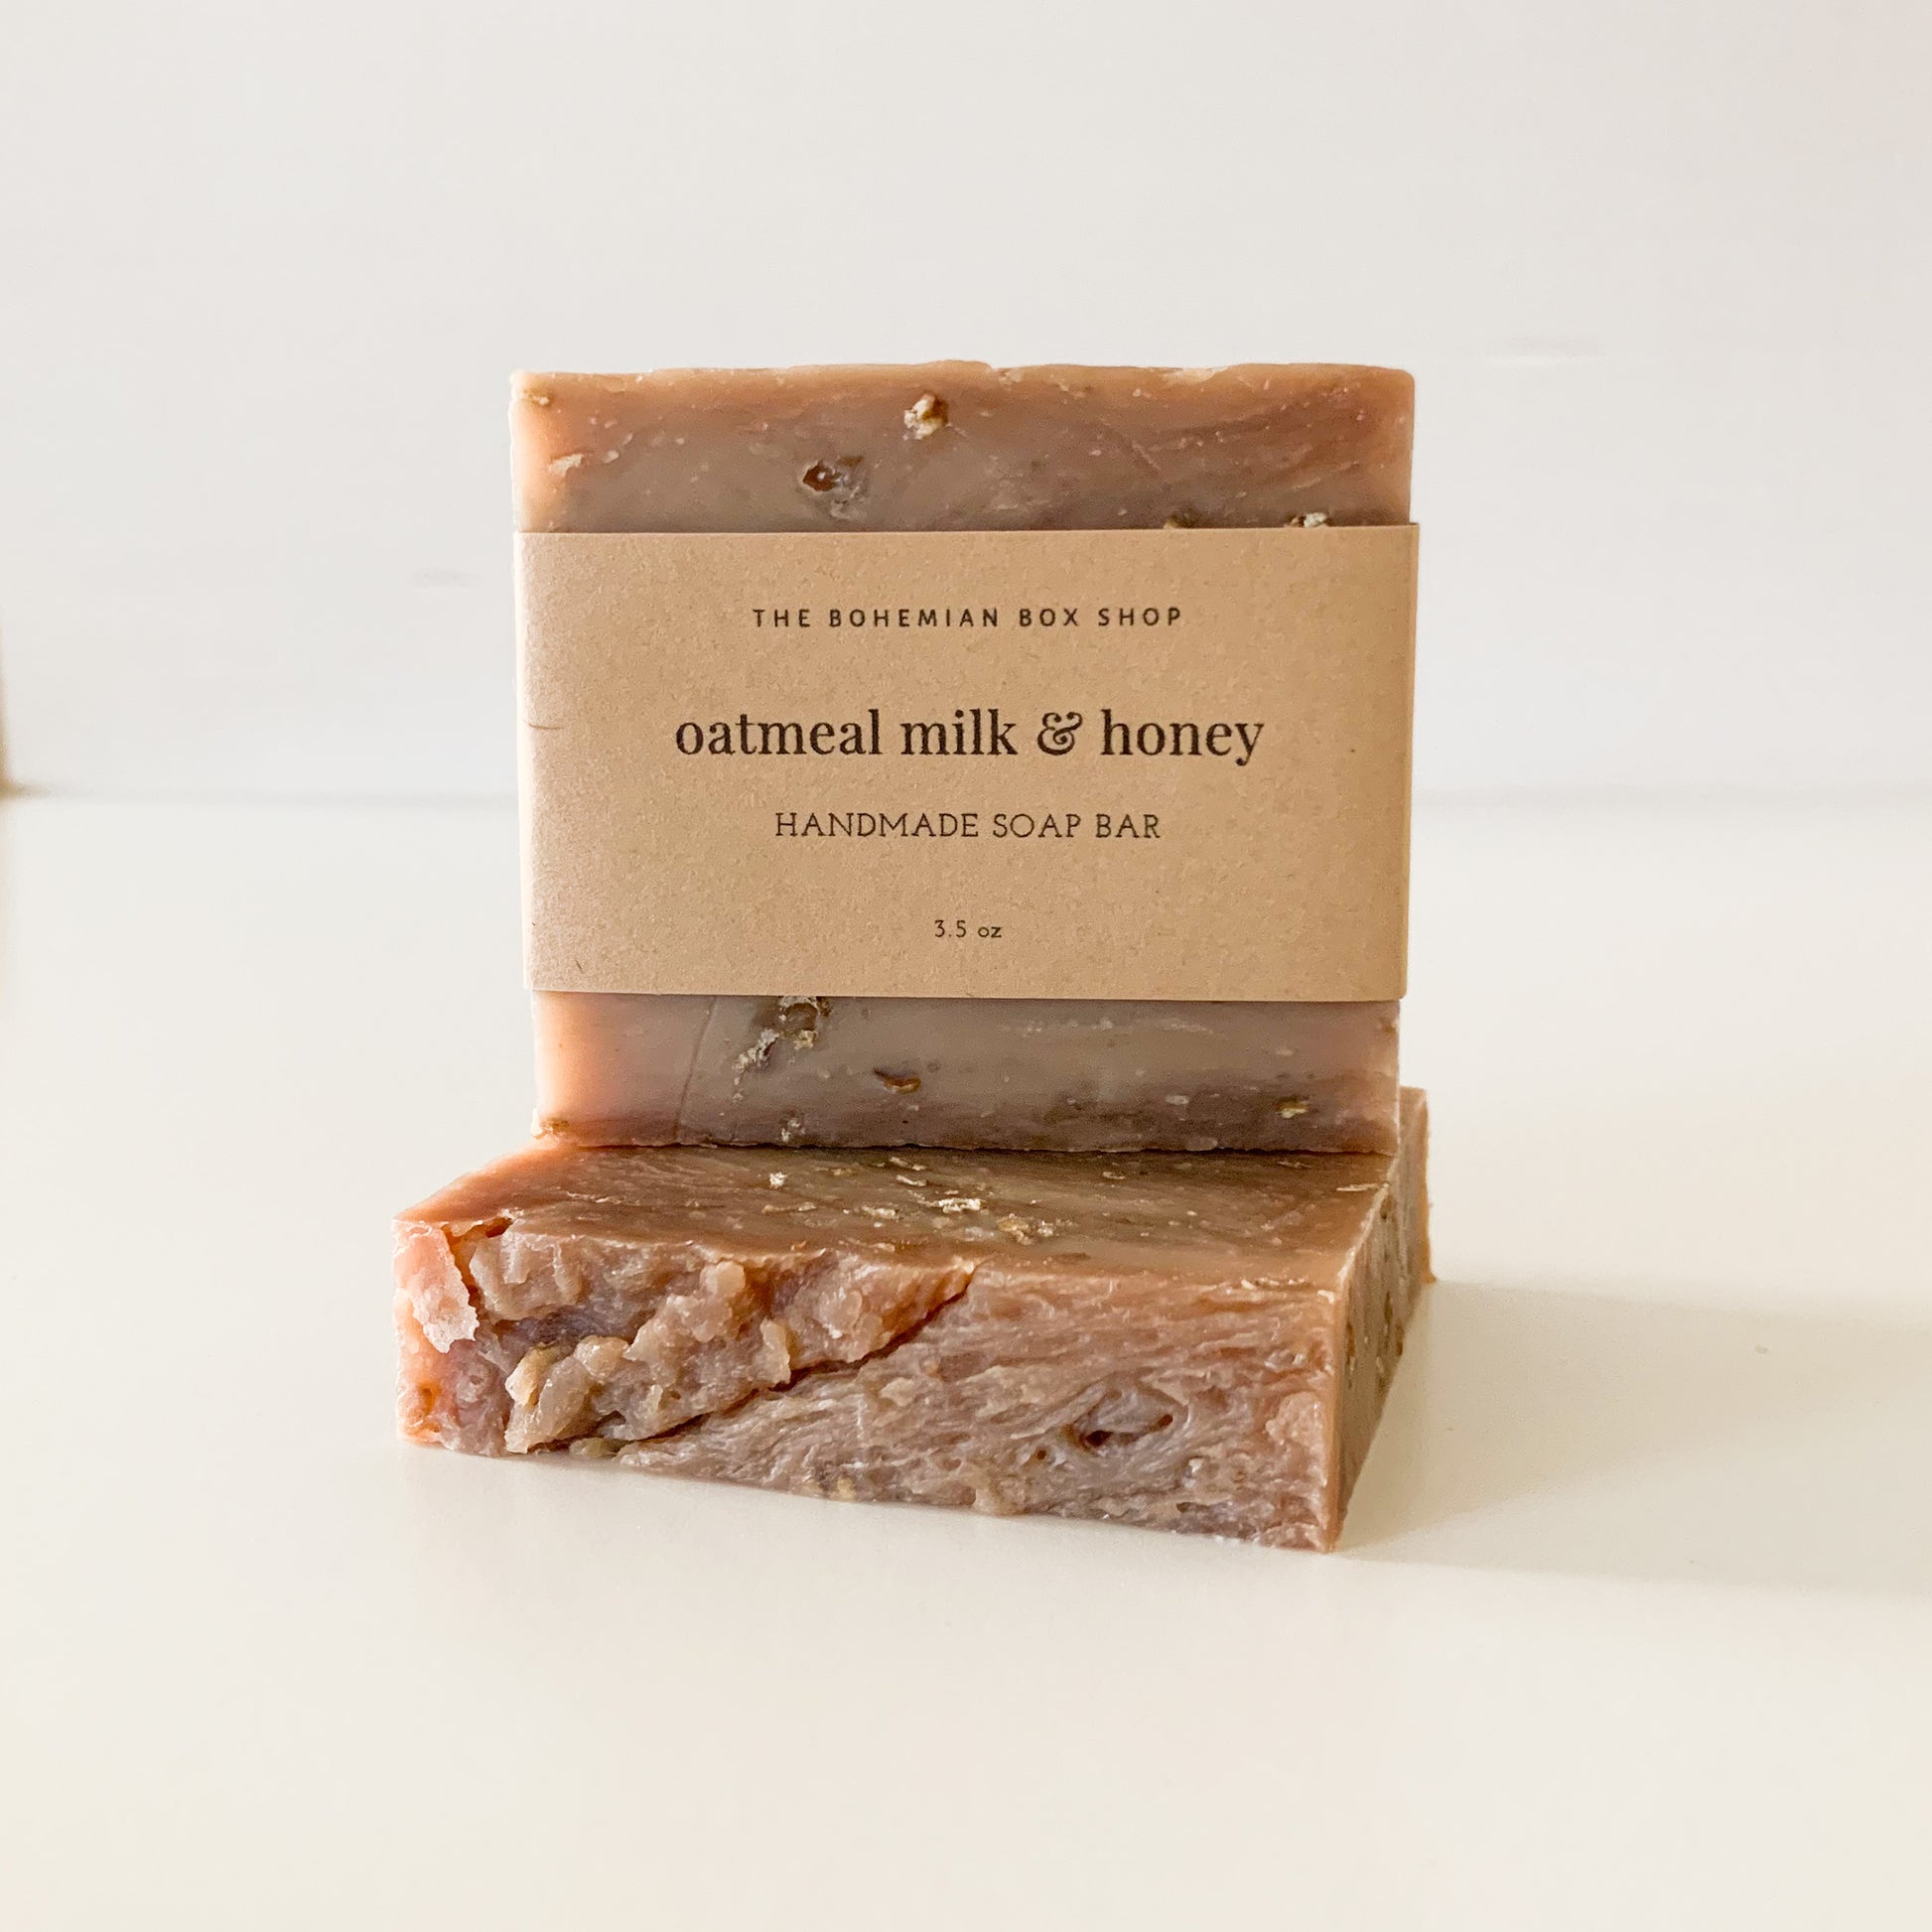 Oatmeal milk and honey handmade soap bar